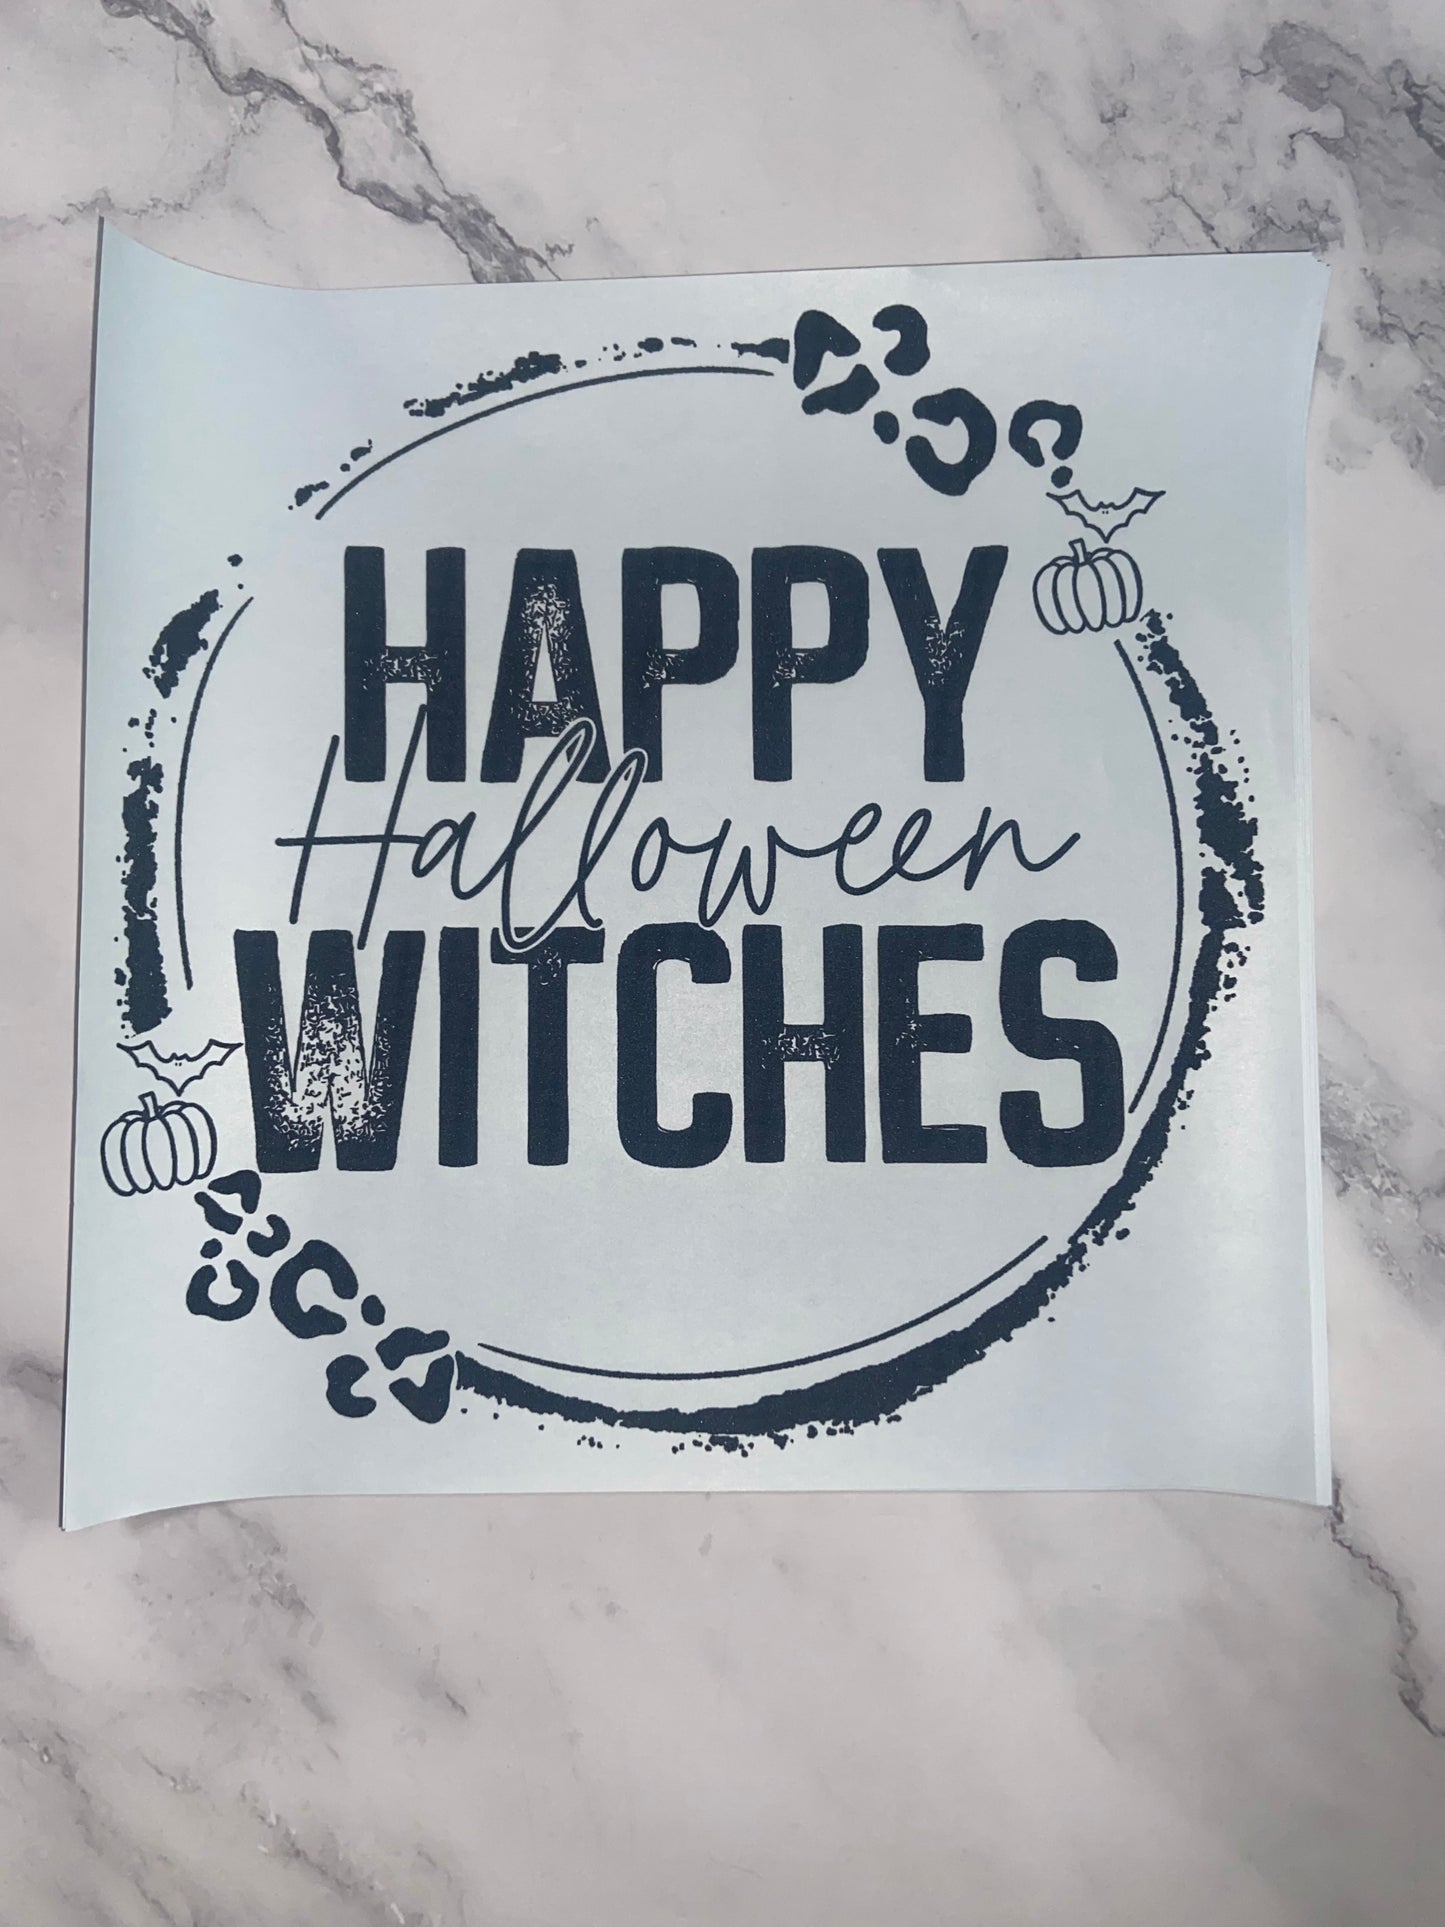 Happy Halloween witches print